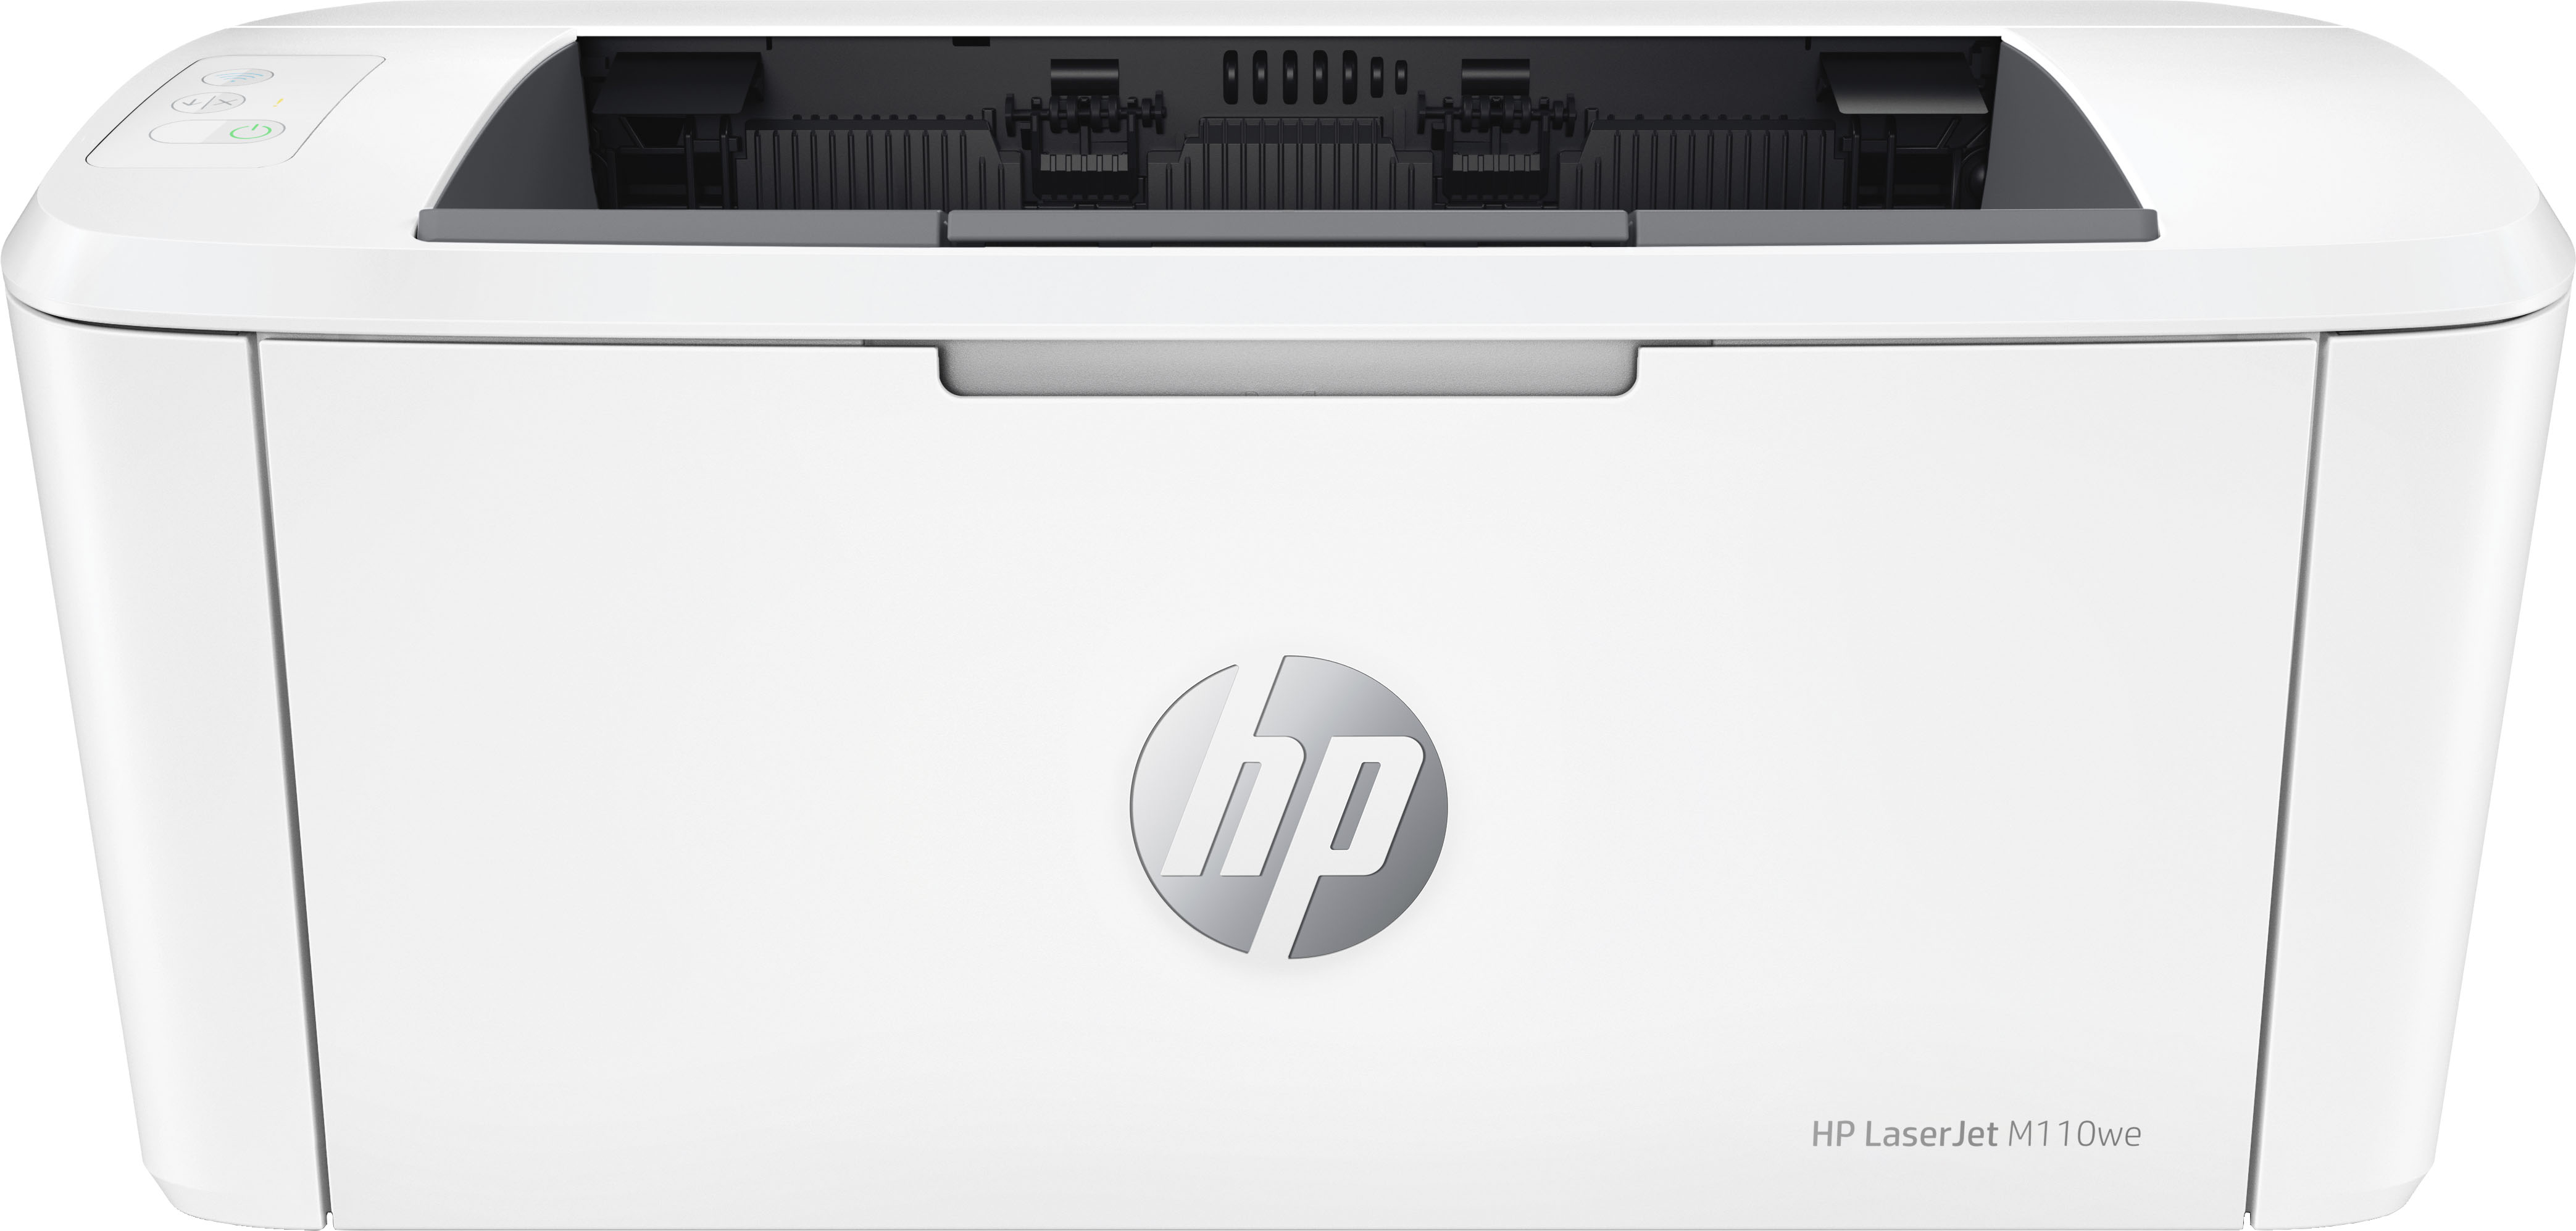 HP LaserJet M110we Wireless Black and White Laser Printer with 6